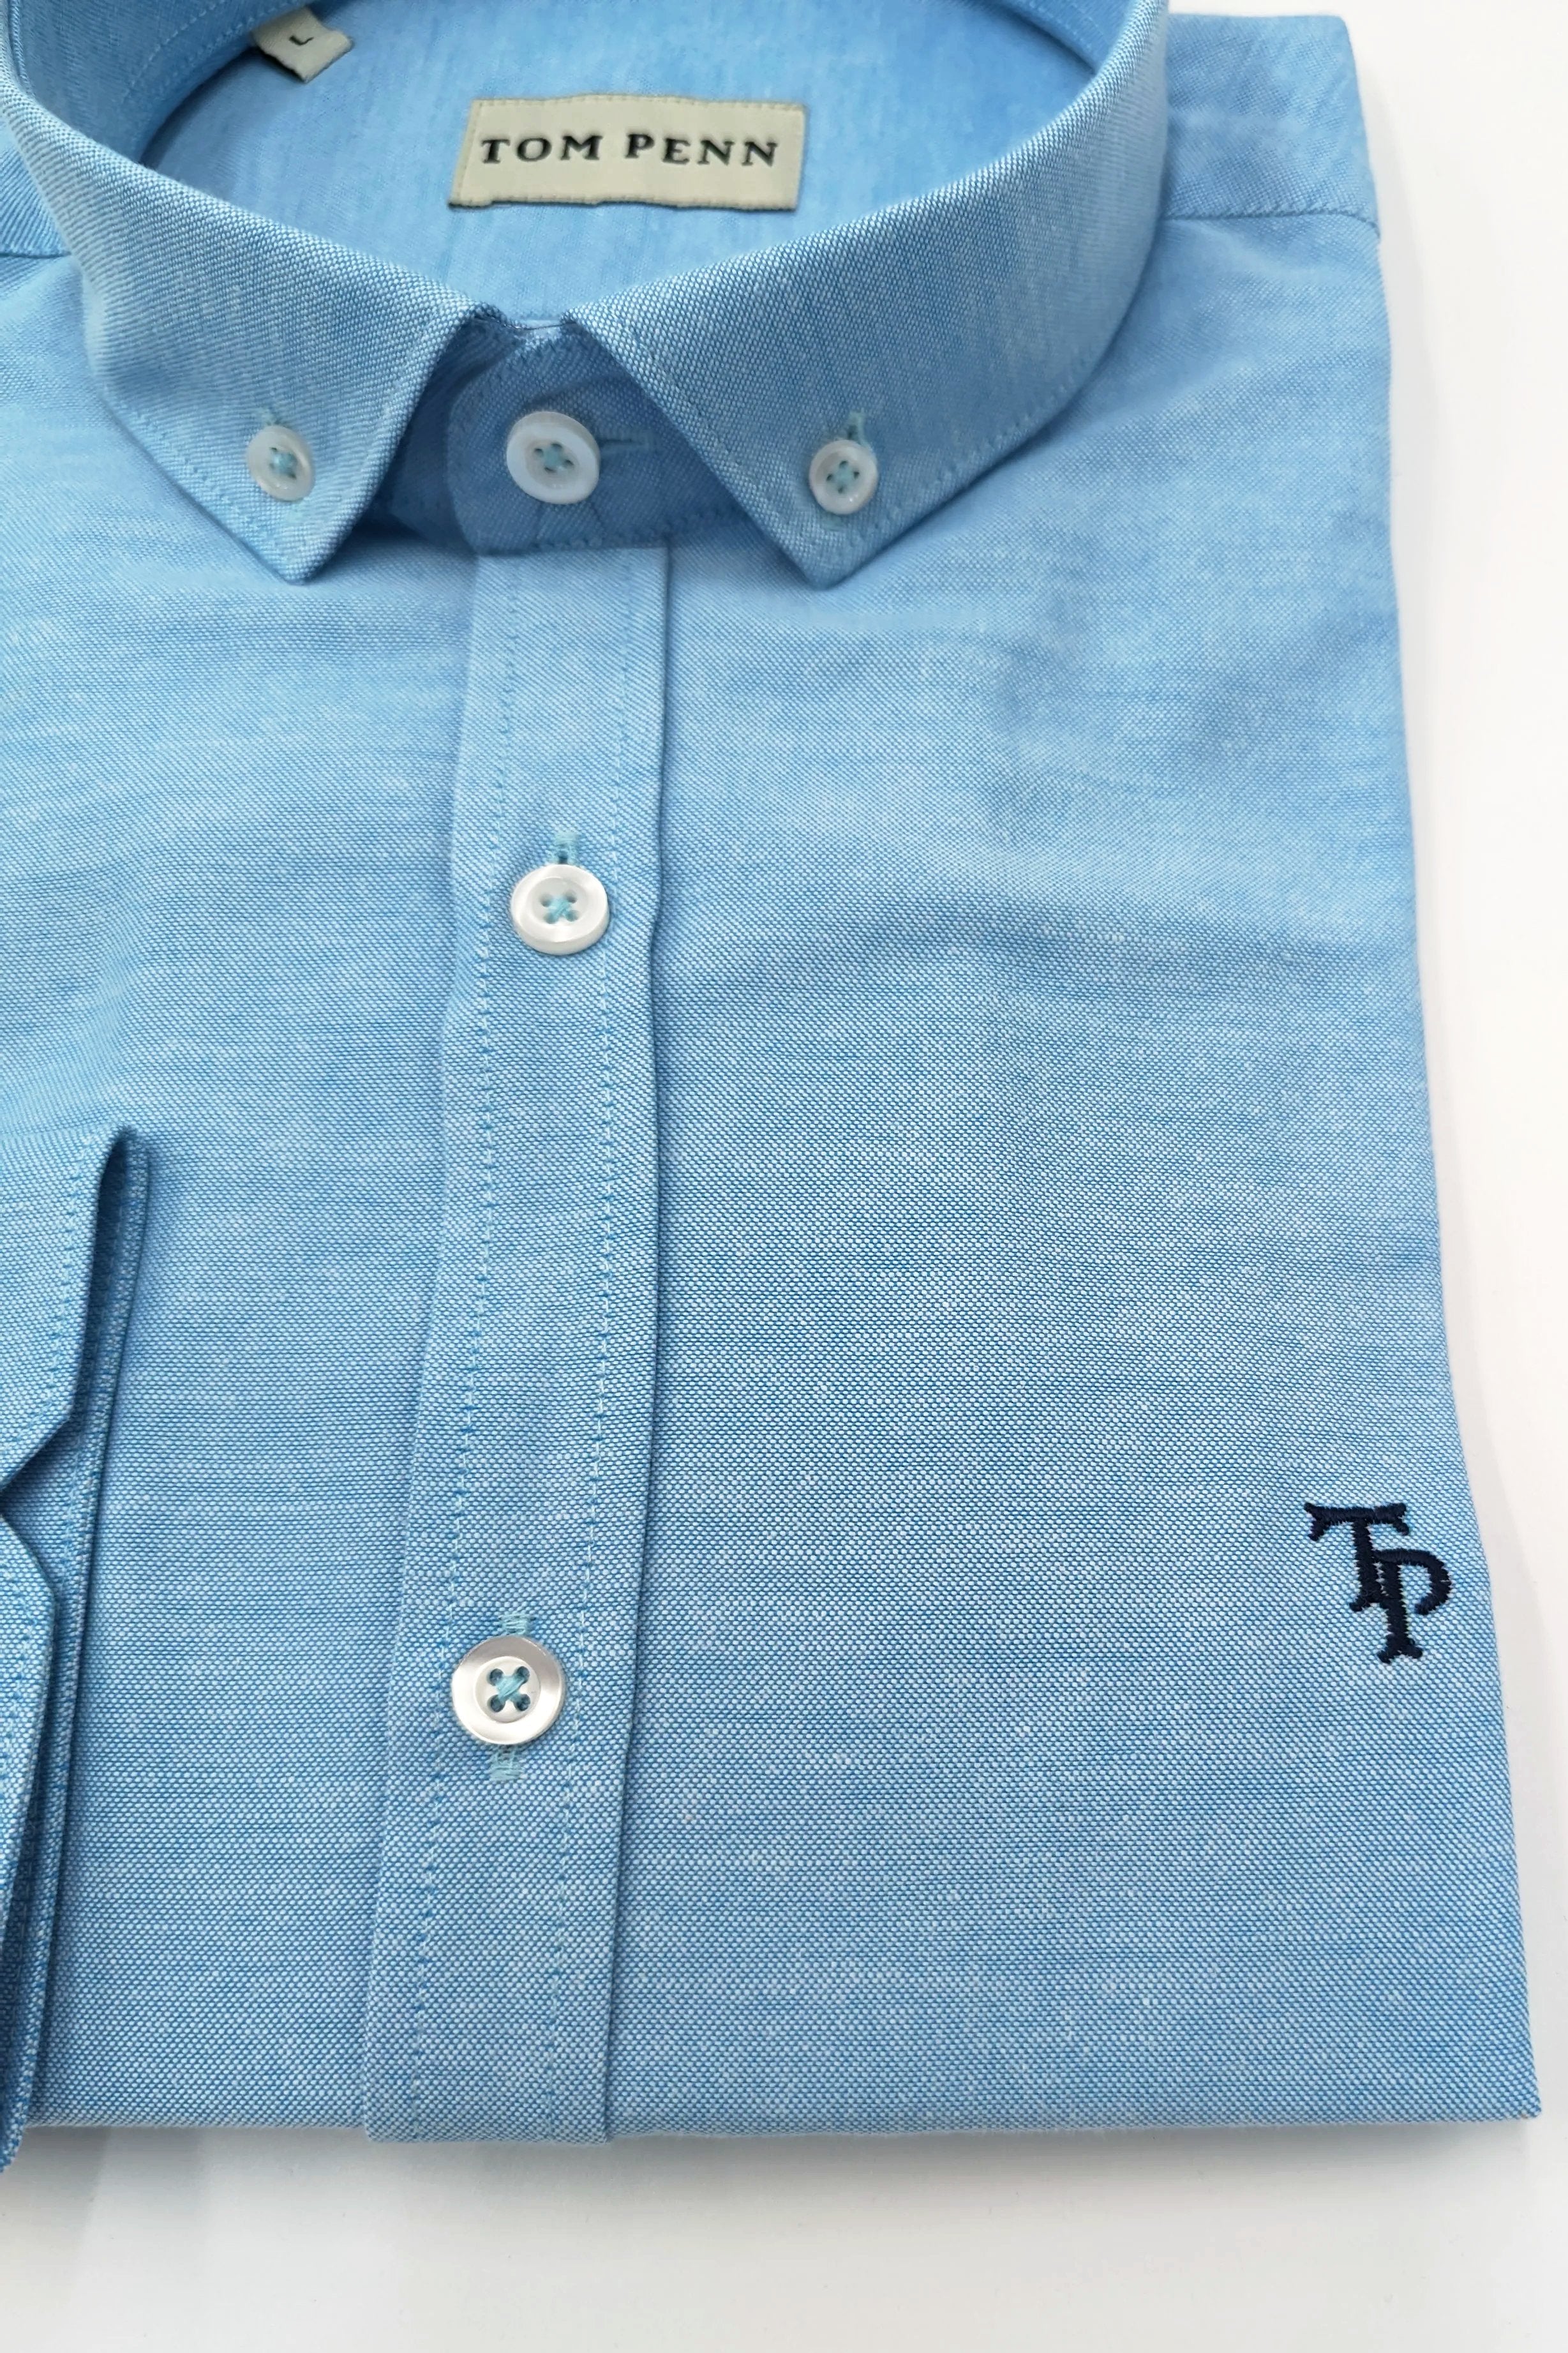 Tom Penn Slim fit Button Down Turquoise Shirt-Detail view